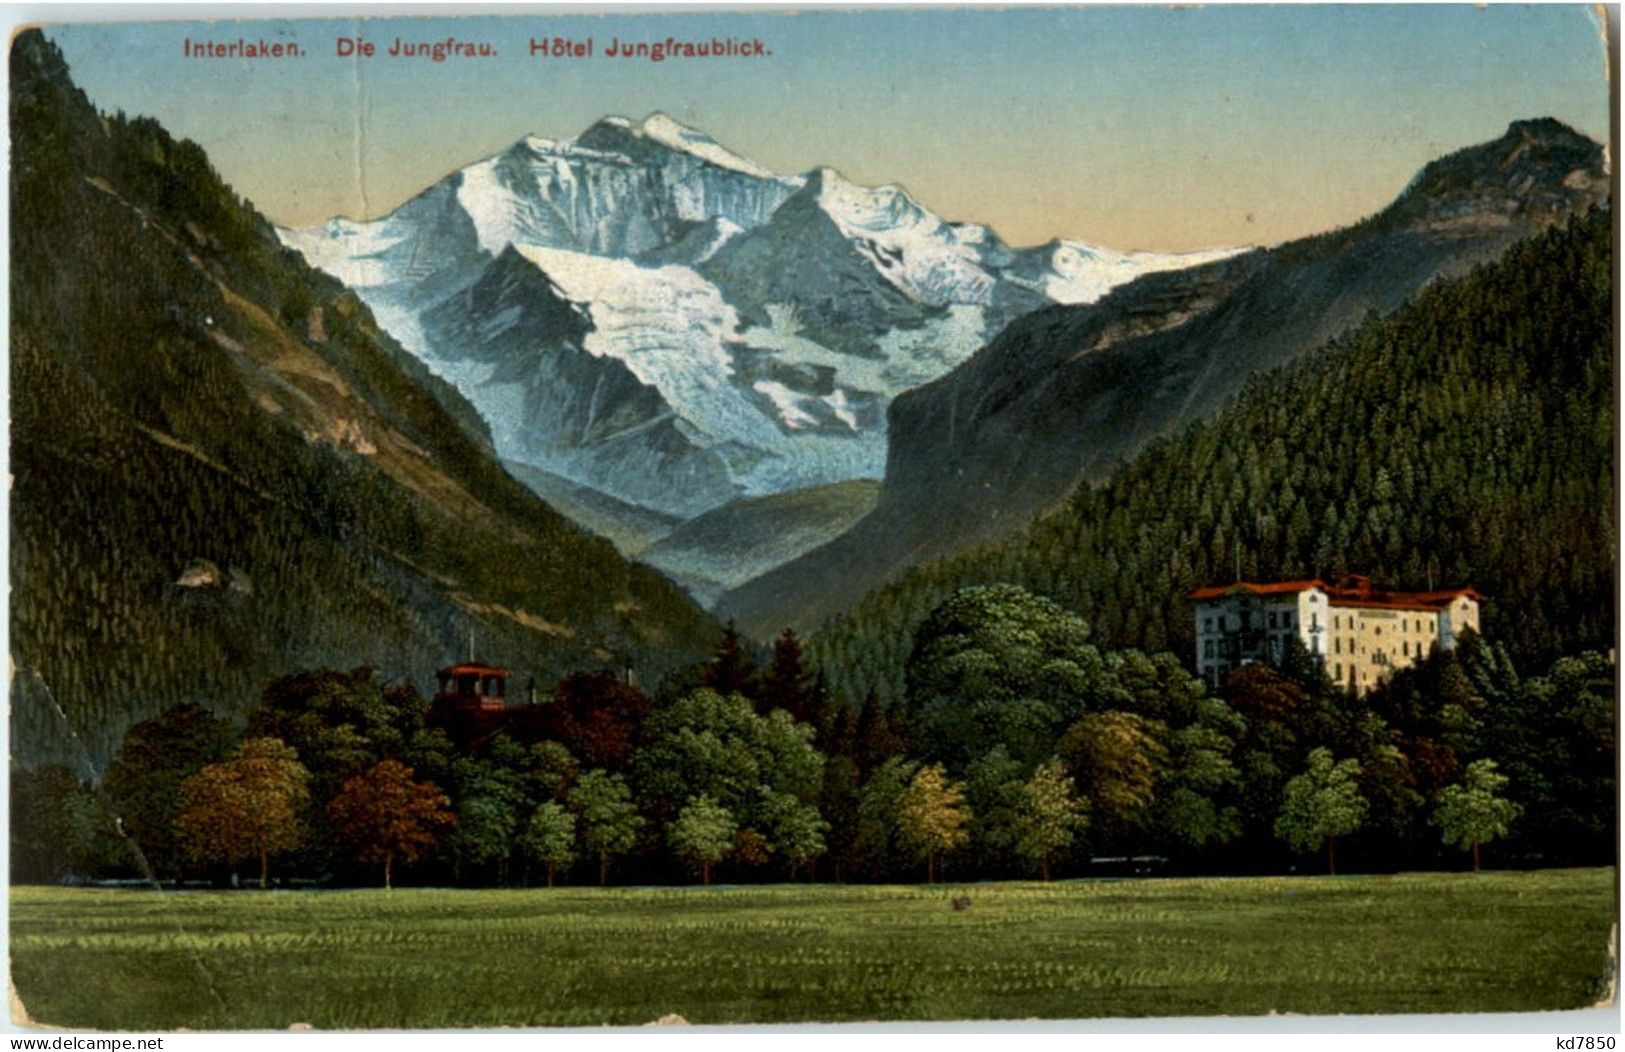 Interlaken - Hotel Jungfraublick - Interlaken